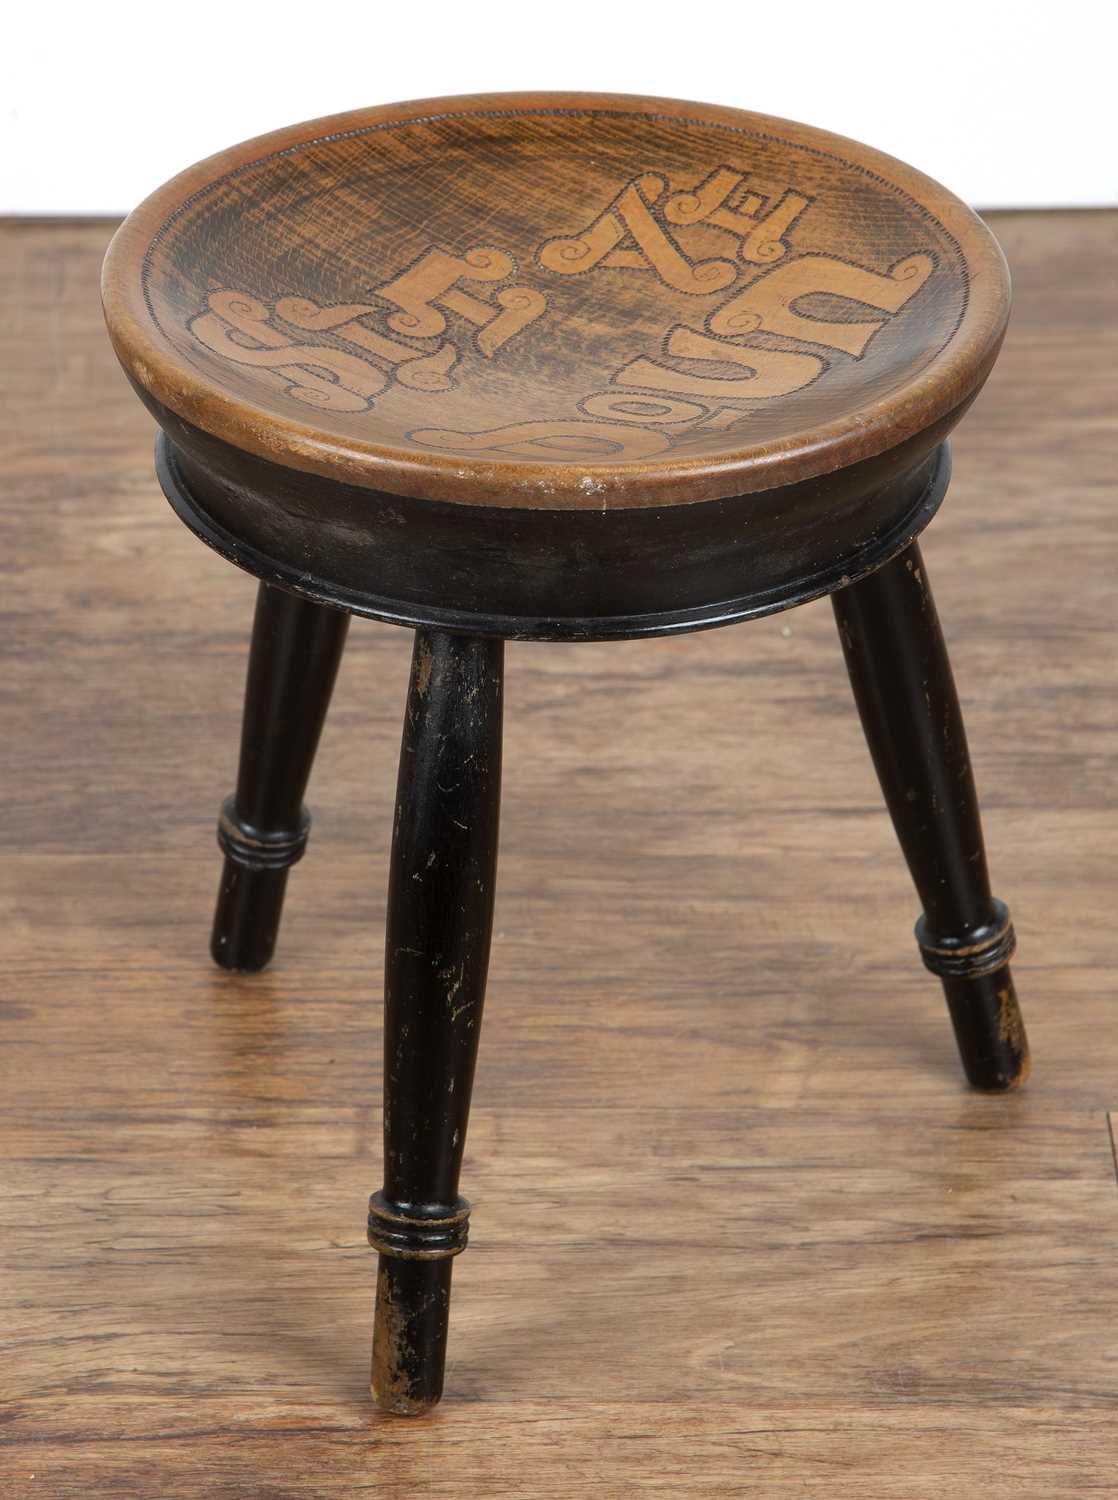 Scottish School low stool with ebonised base and circular pokerwork top reading 'Sit ye doun', - Image 2 of 6